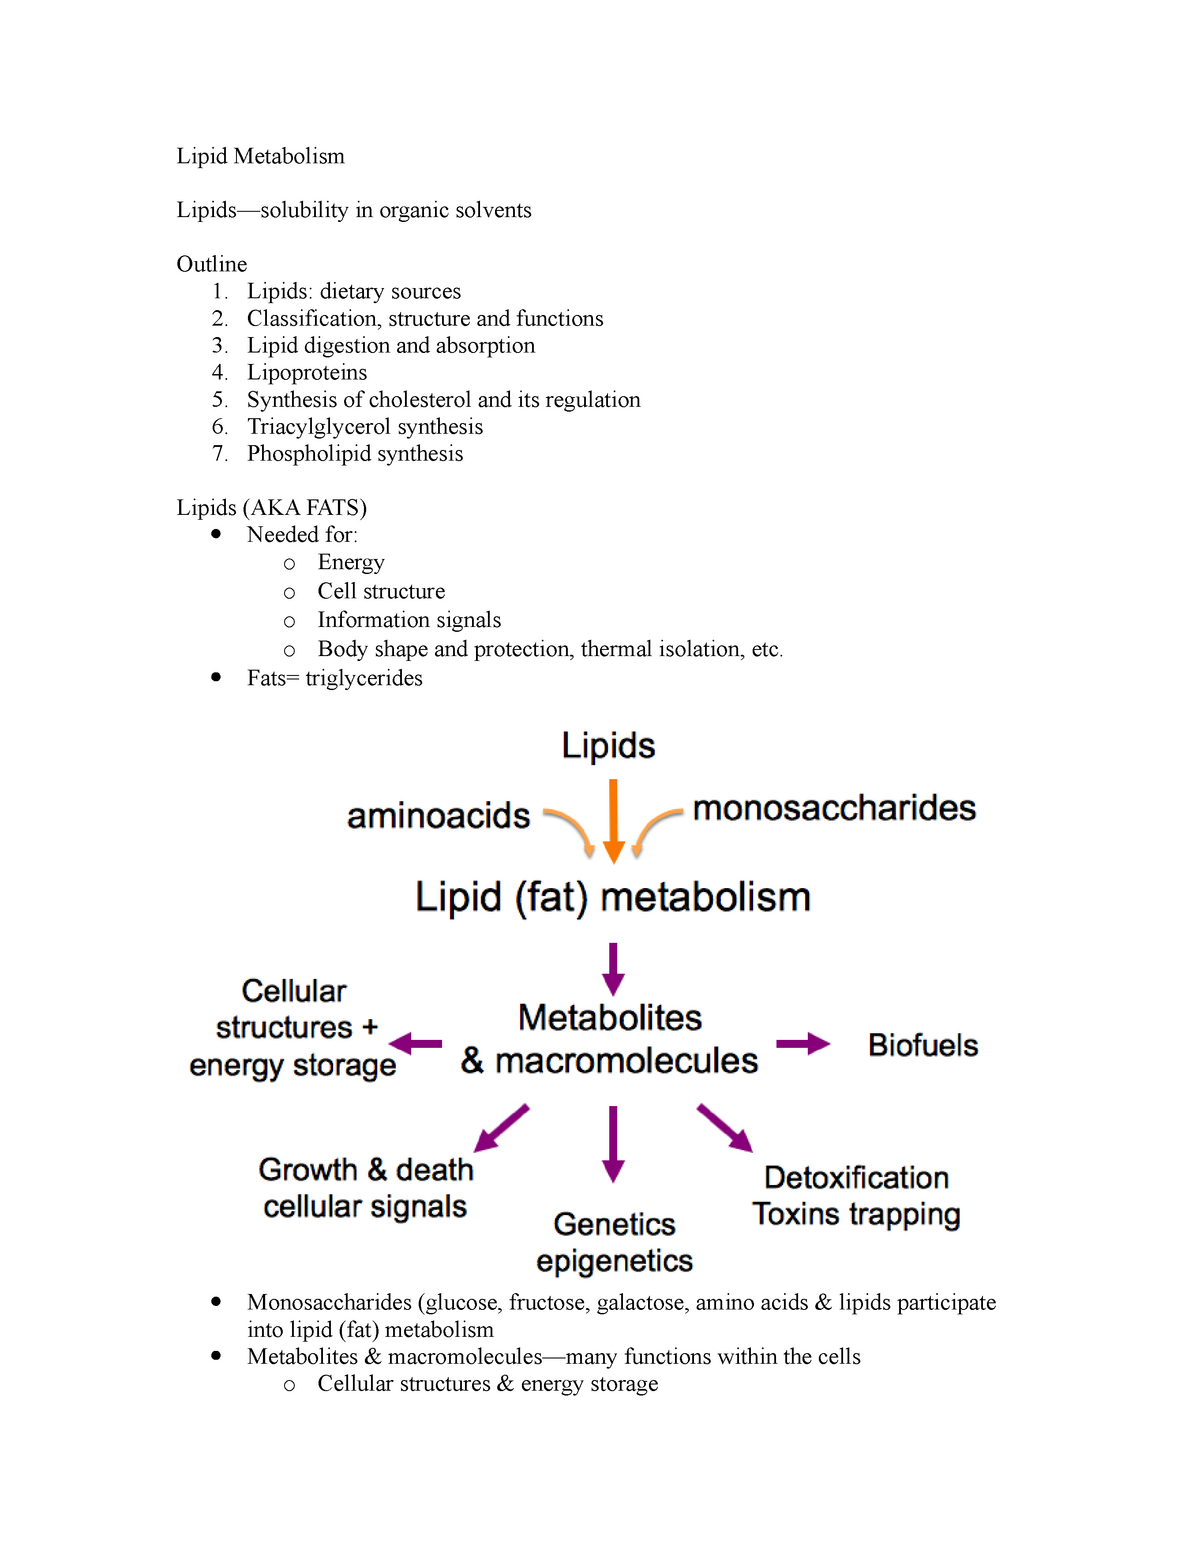 Metabolism lipid 5.7E: Lipid